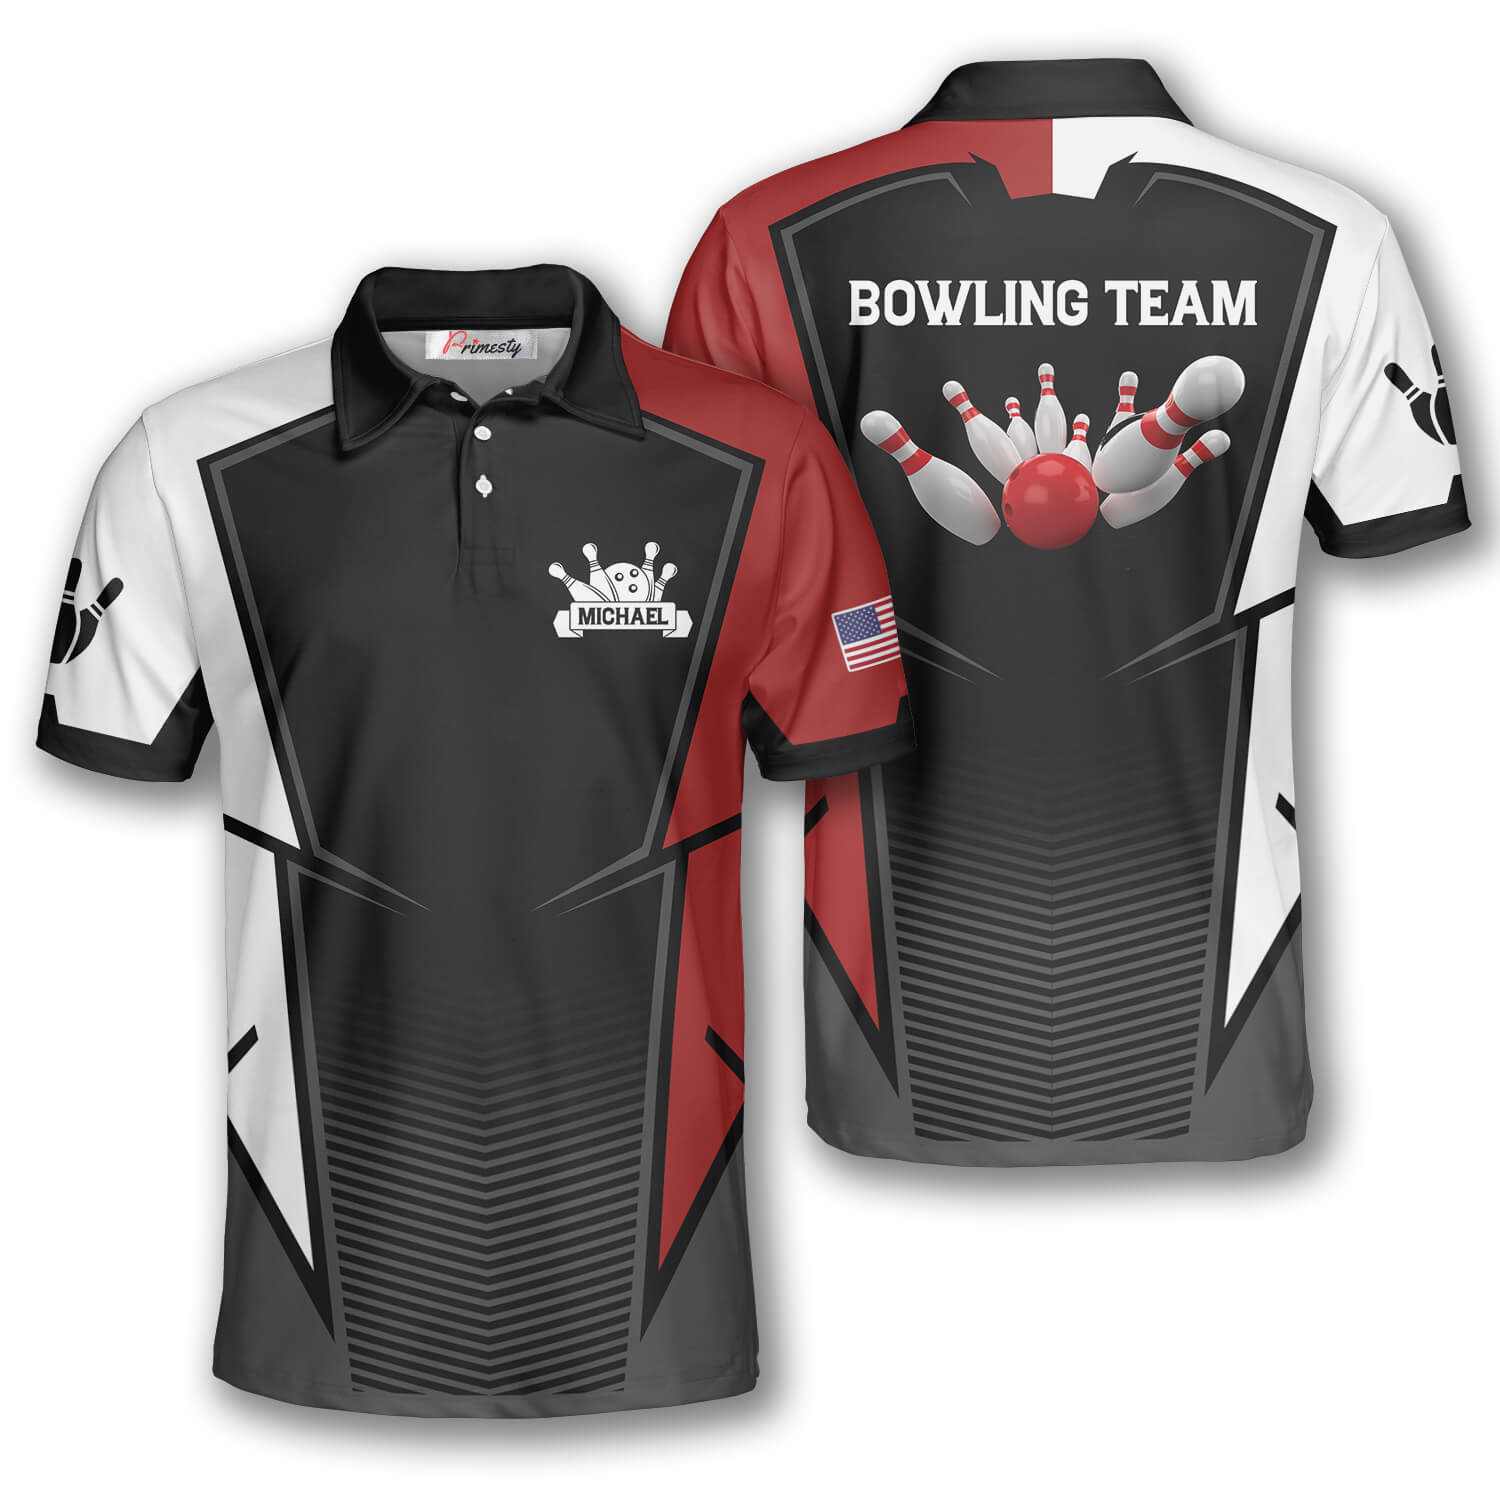 Best Strike Custom Bowling Shirts for Men - Primesty